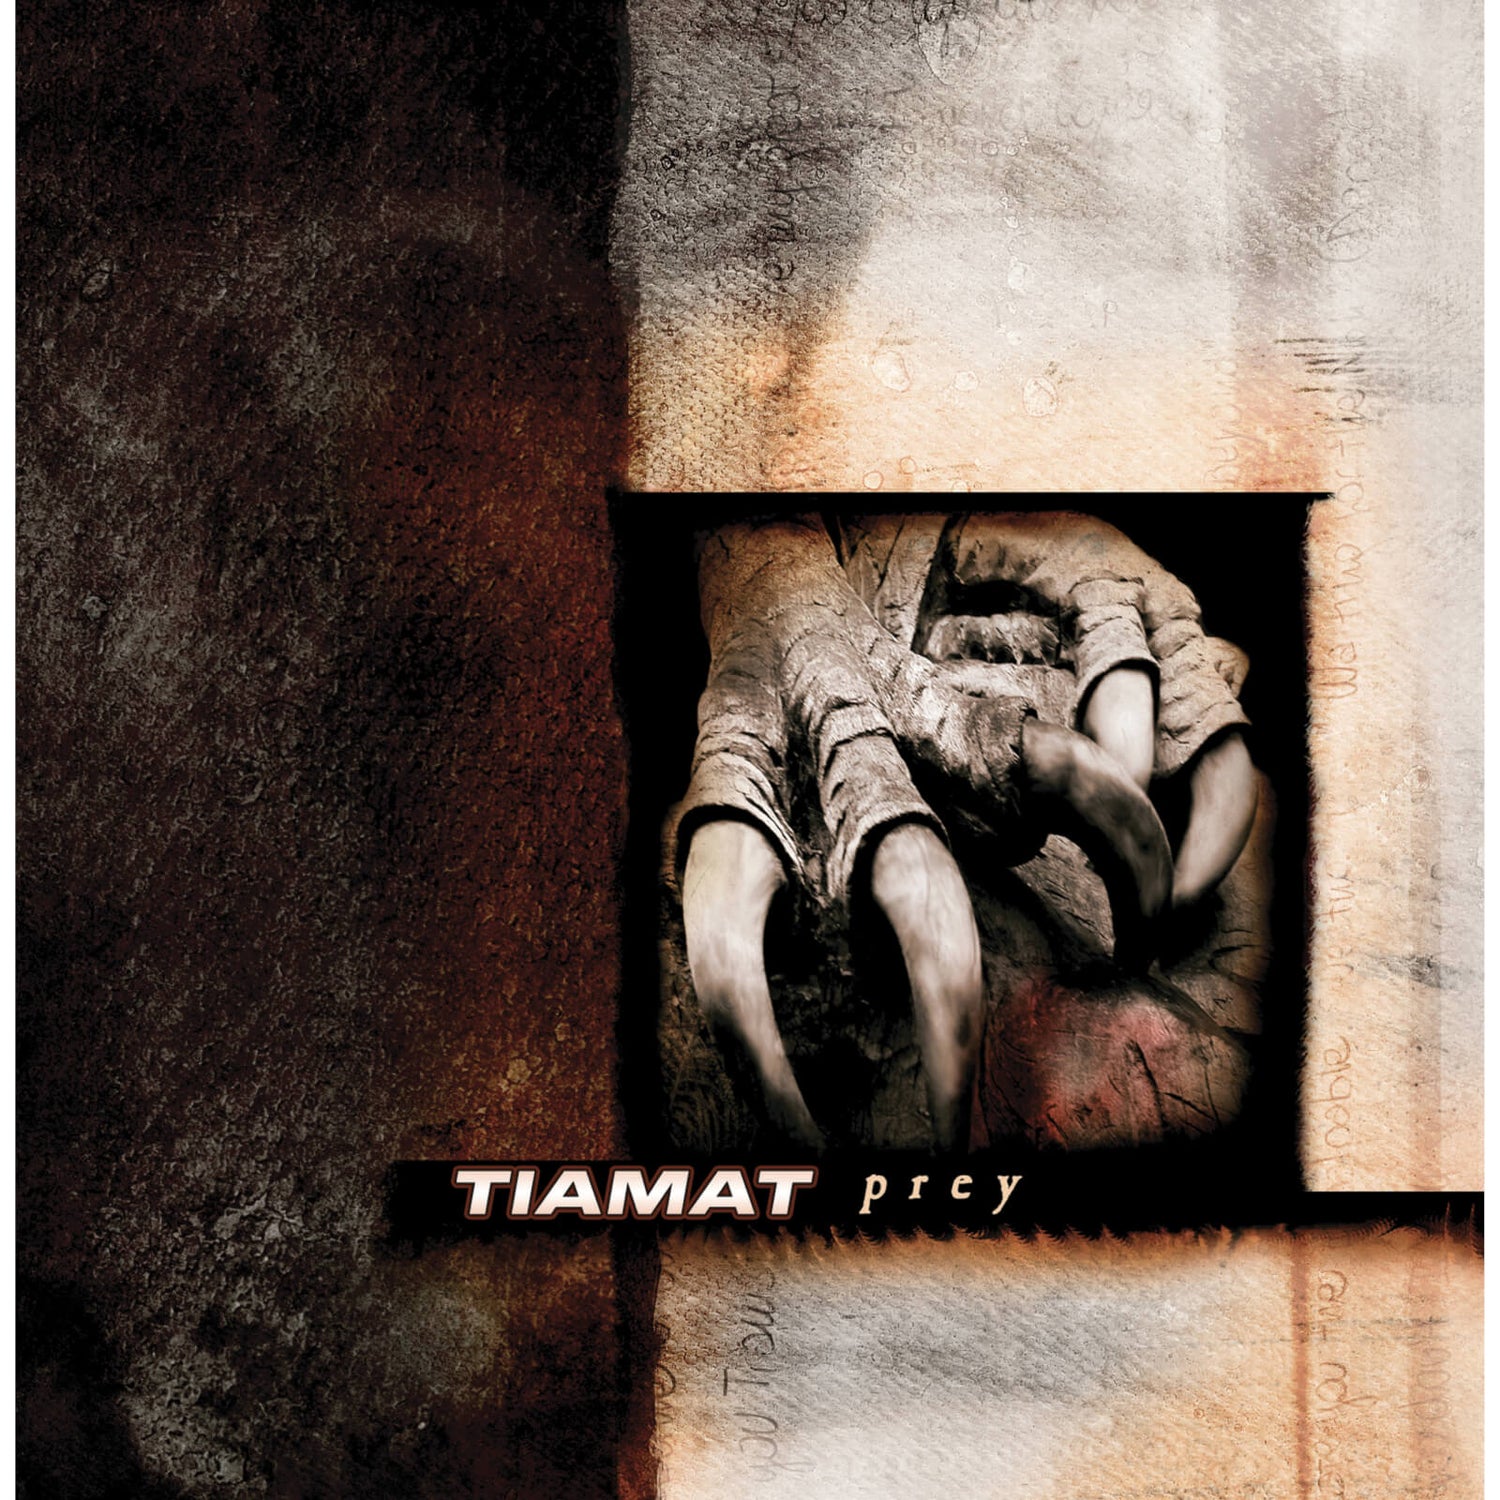 Tiamat - Prey Vinyl (Metal Box)